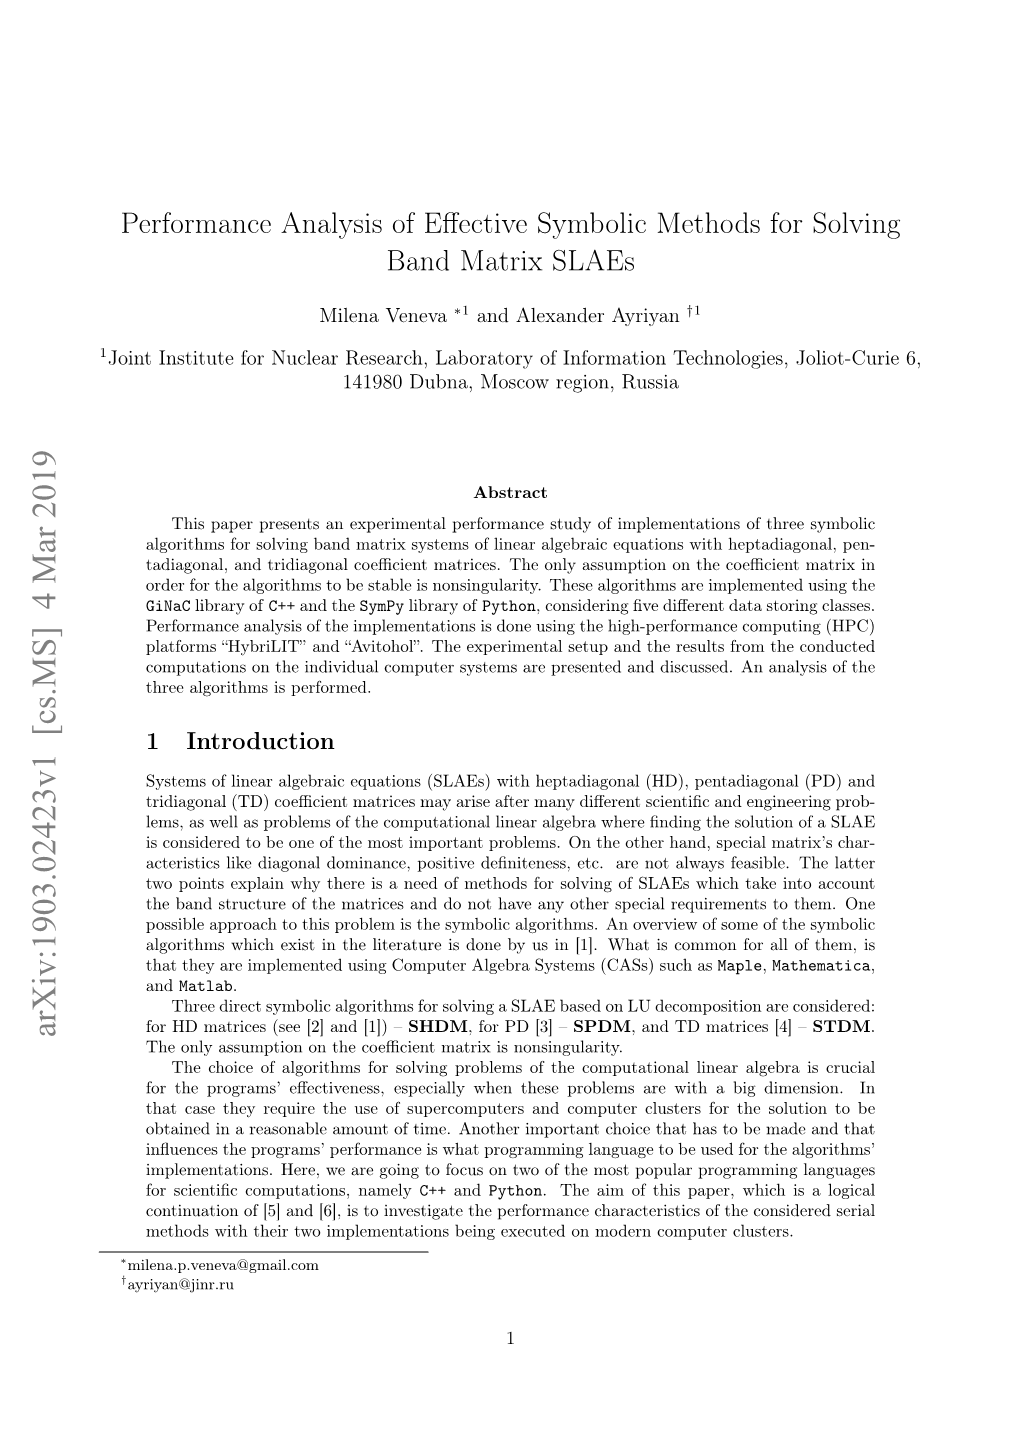 Performance Analysis of Effective Symbolic Methods for Solving Band Matrix Slaes